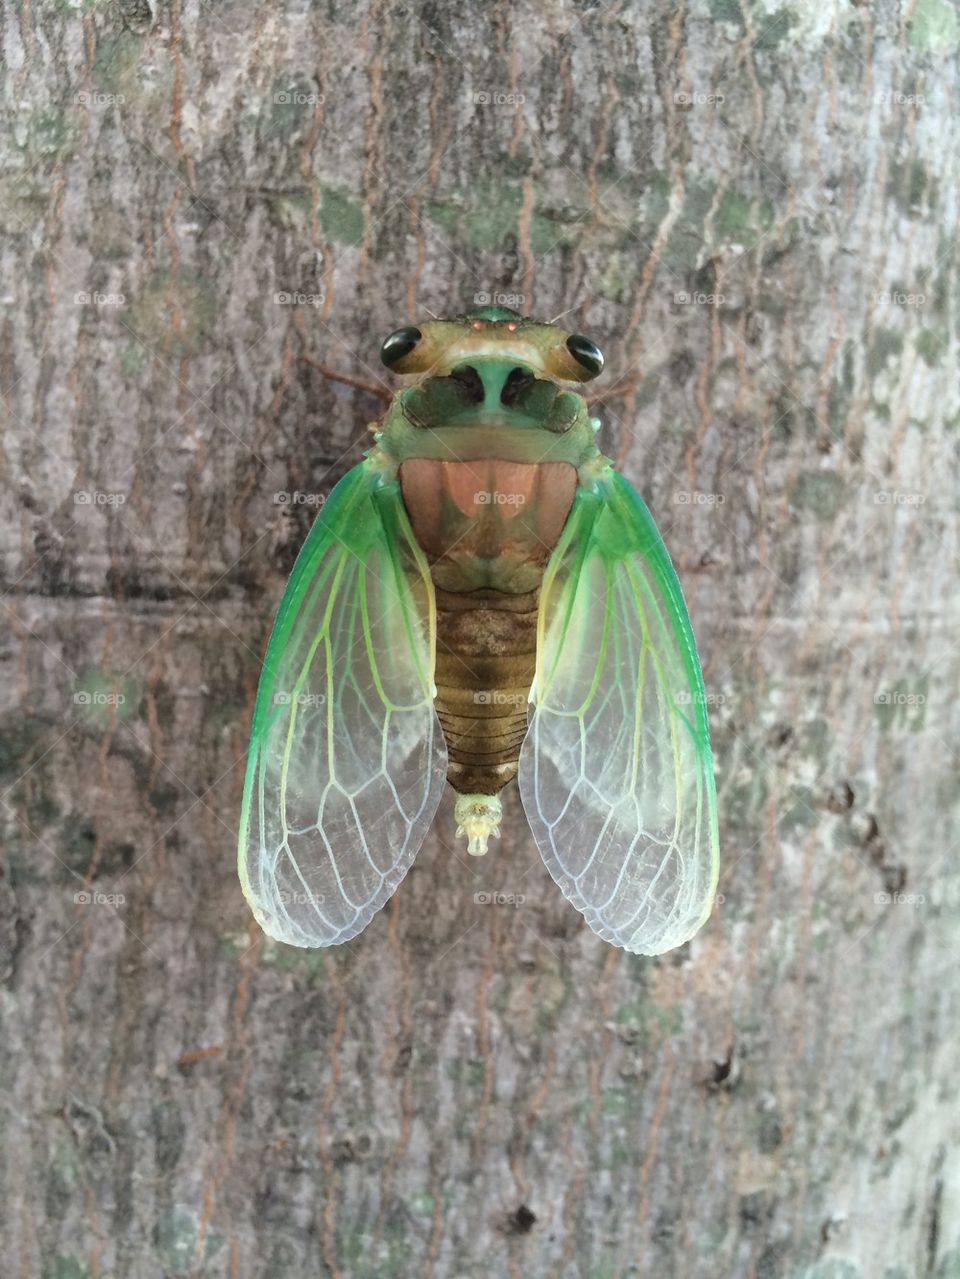 Cicada wings